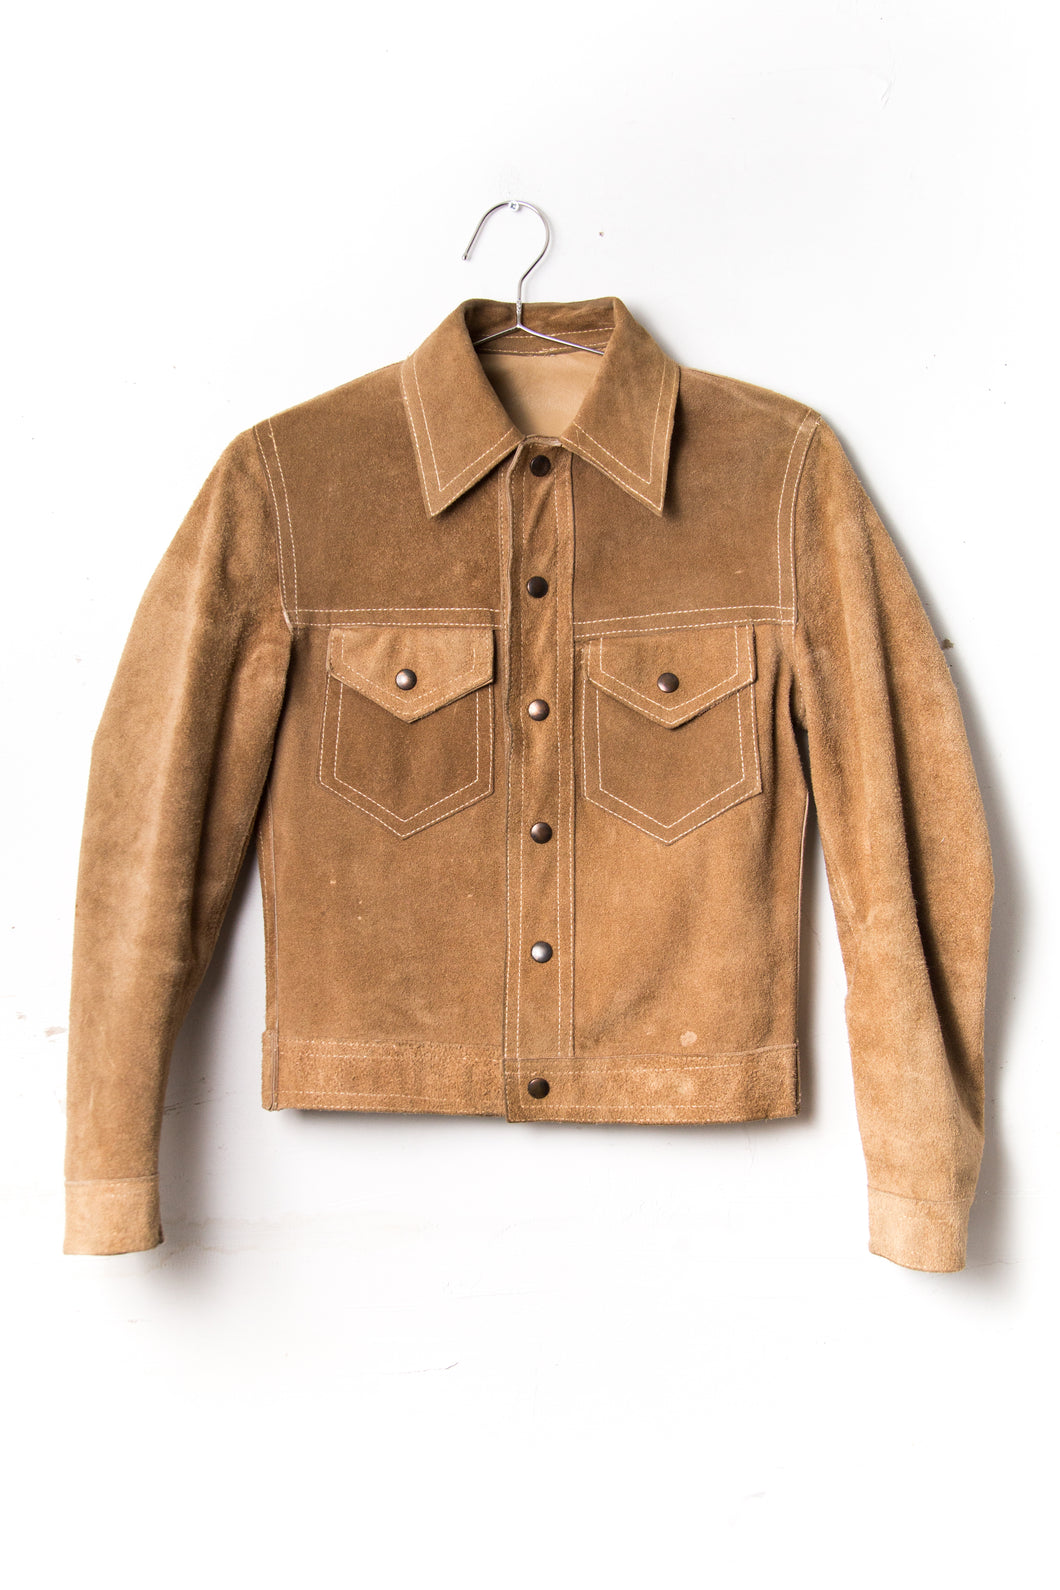 1960s Reversible Leather Jacket